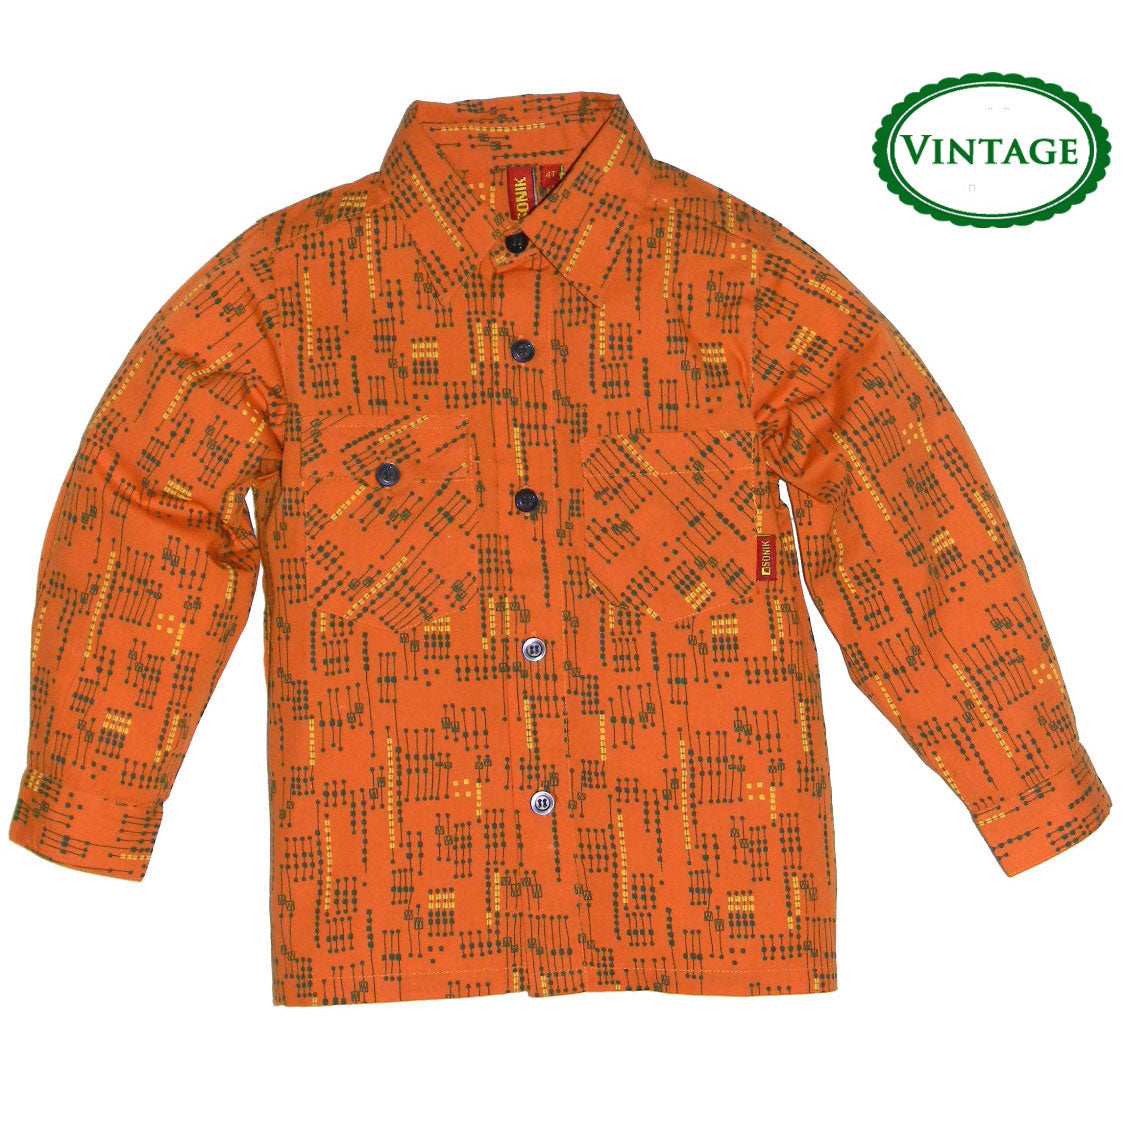 Boys Vintage Tangerine Woven Shirt by Sonik